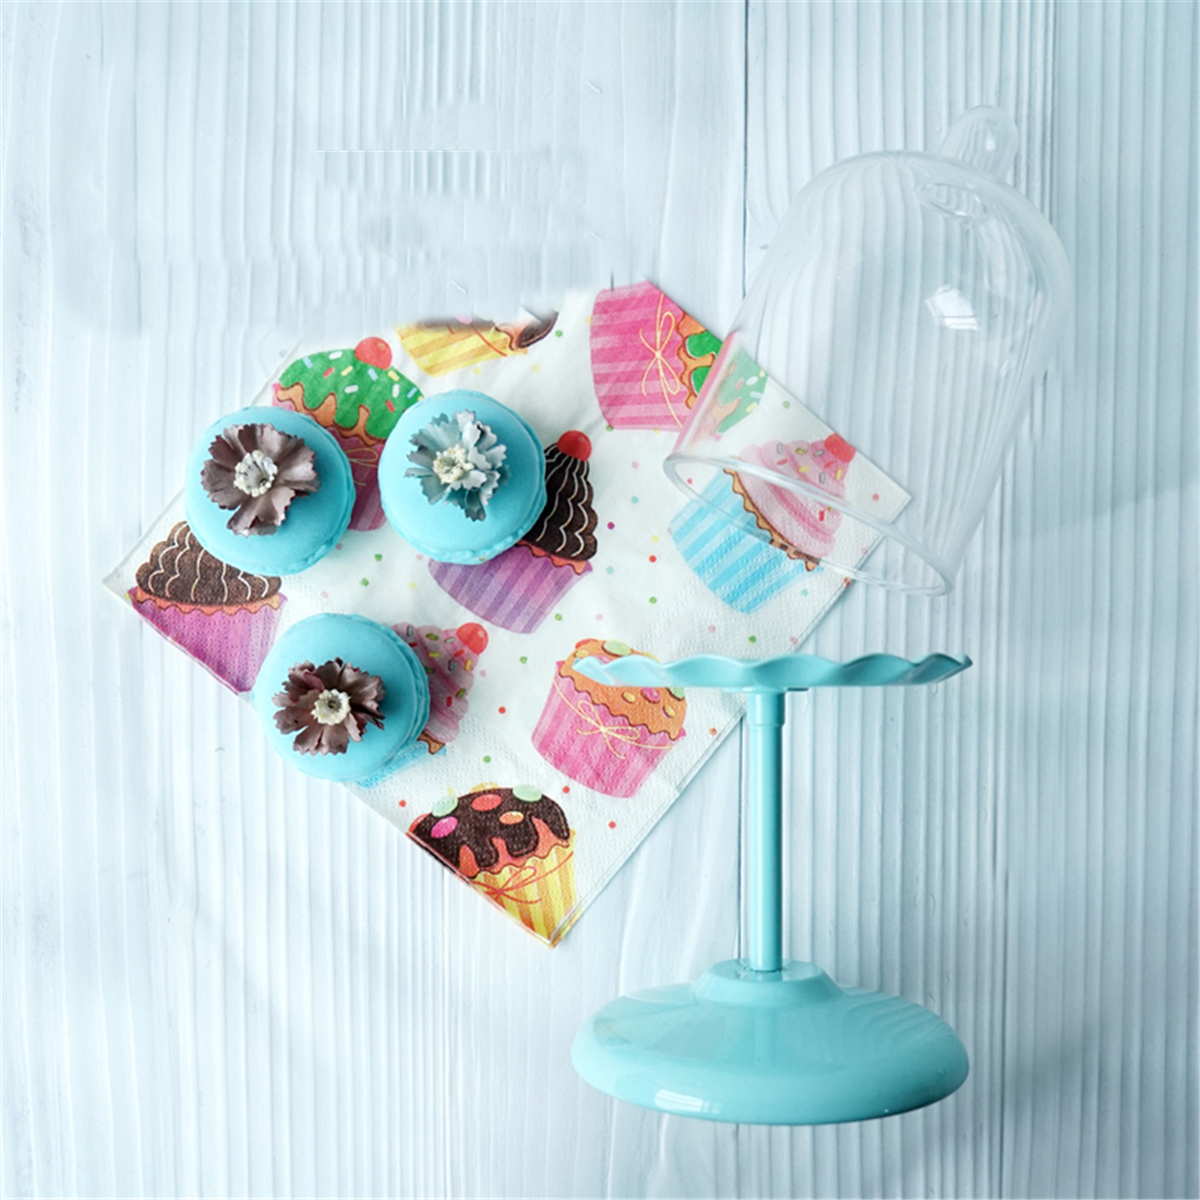 3-Style-Vintage-Metal-Wedding-Cupcake-Stand-Cake-Dessert-Holder-Display-Party-Decorations-1370176-3